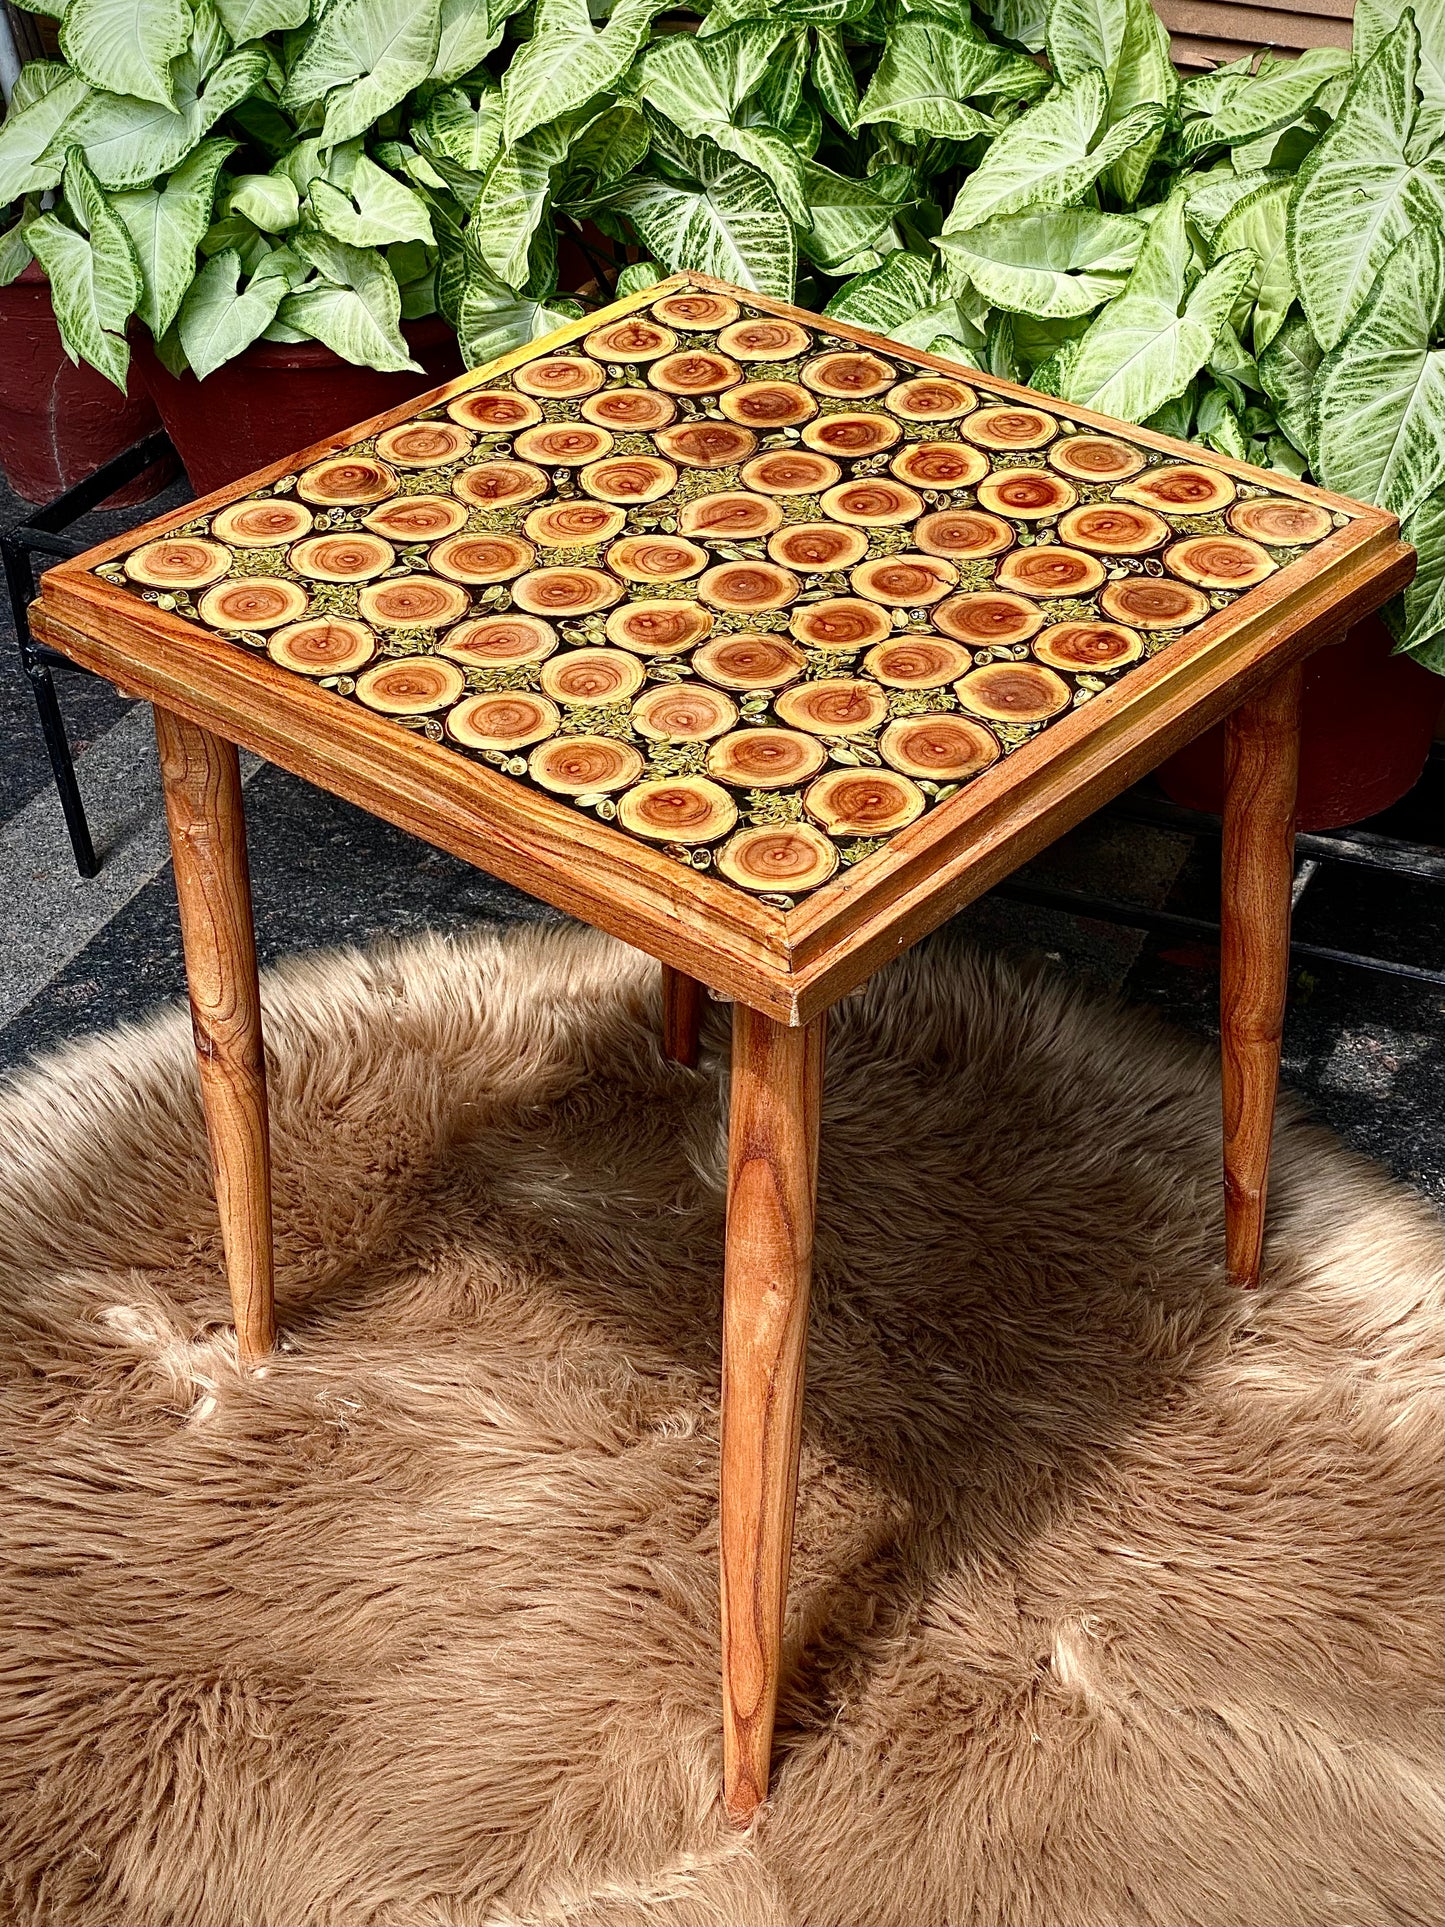 SUGANDH- DIY TABLE KIT